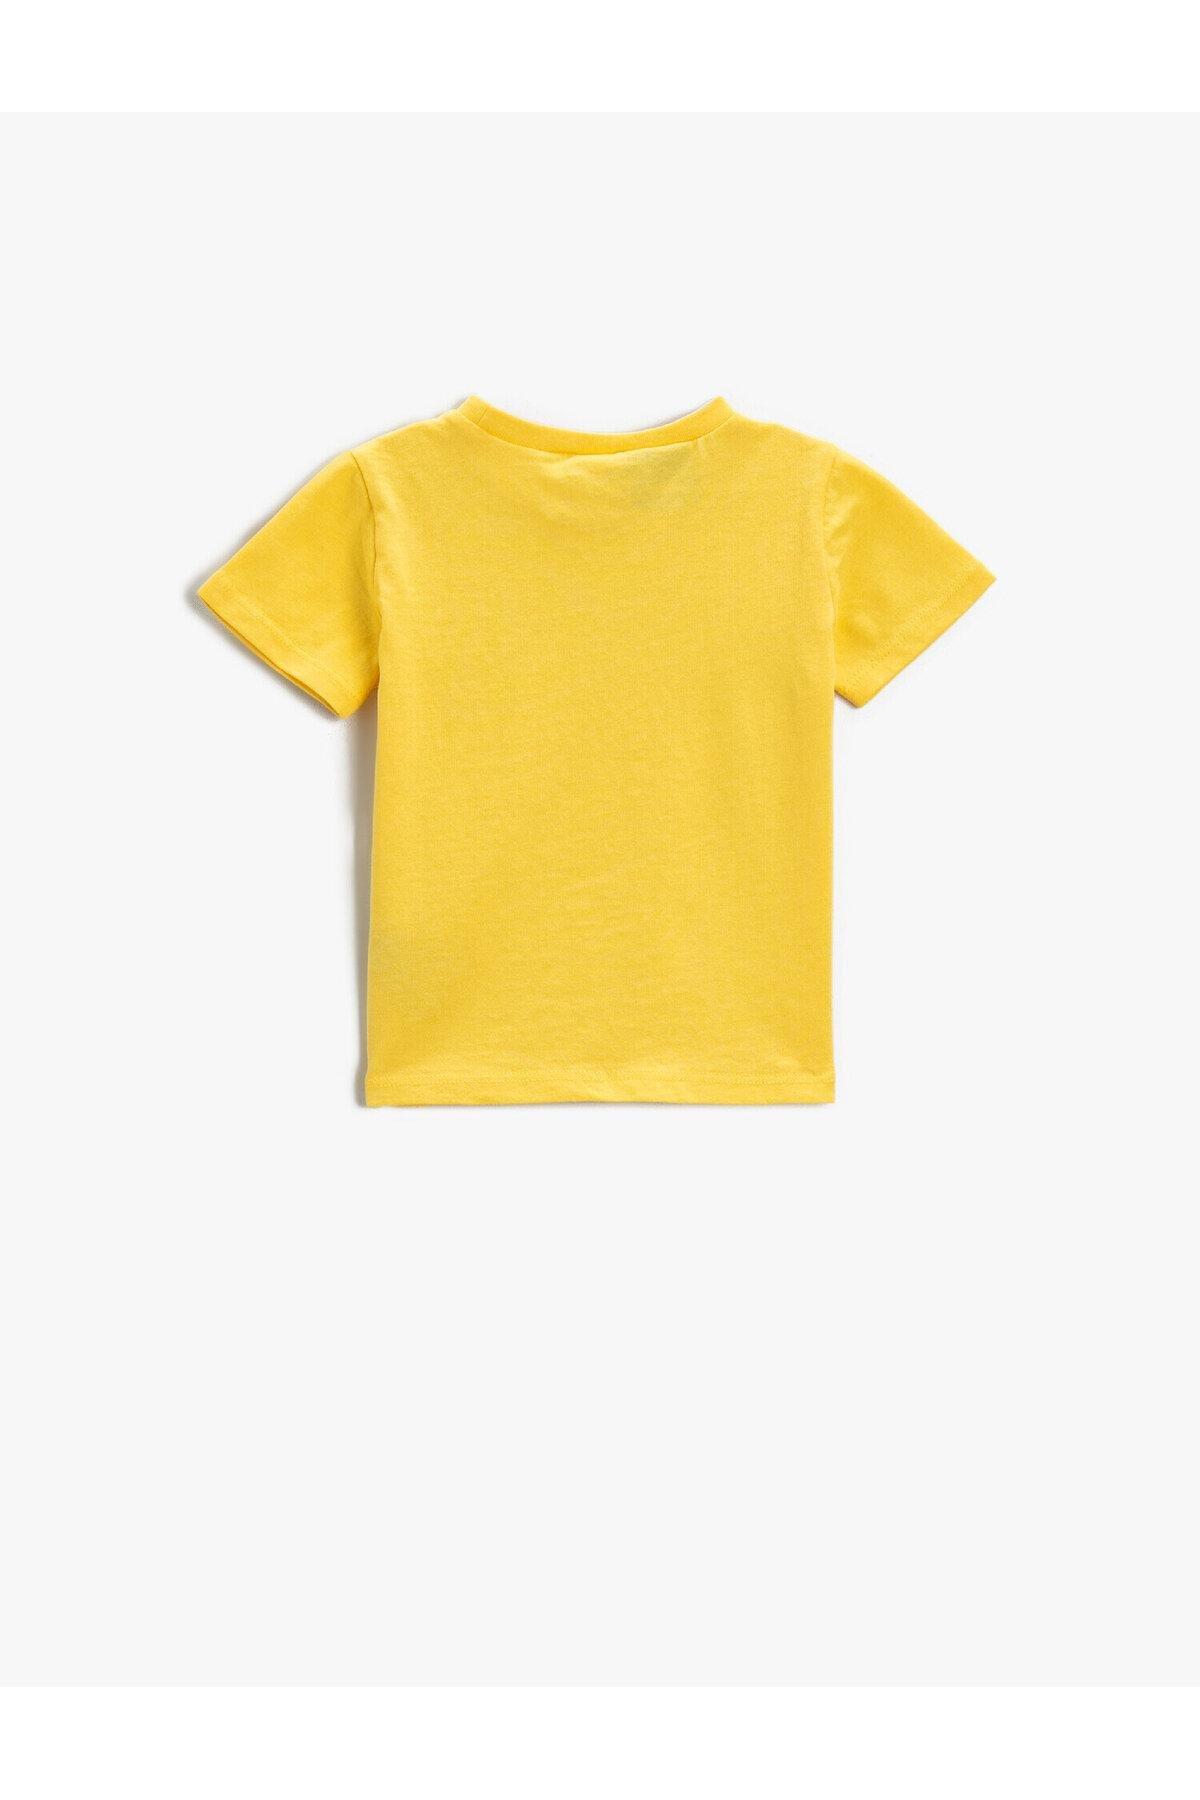 Koton - Yellow Printed T-Shirt, Kids Boys